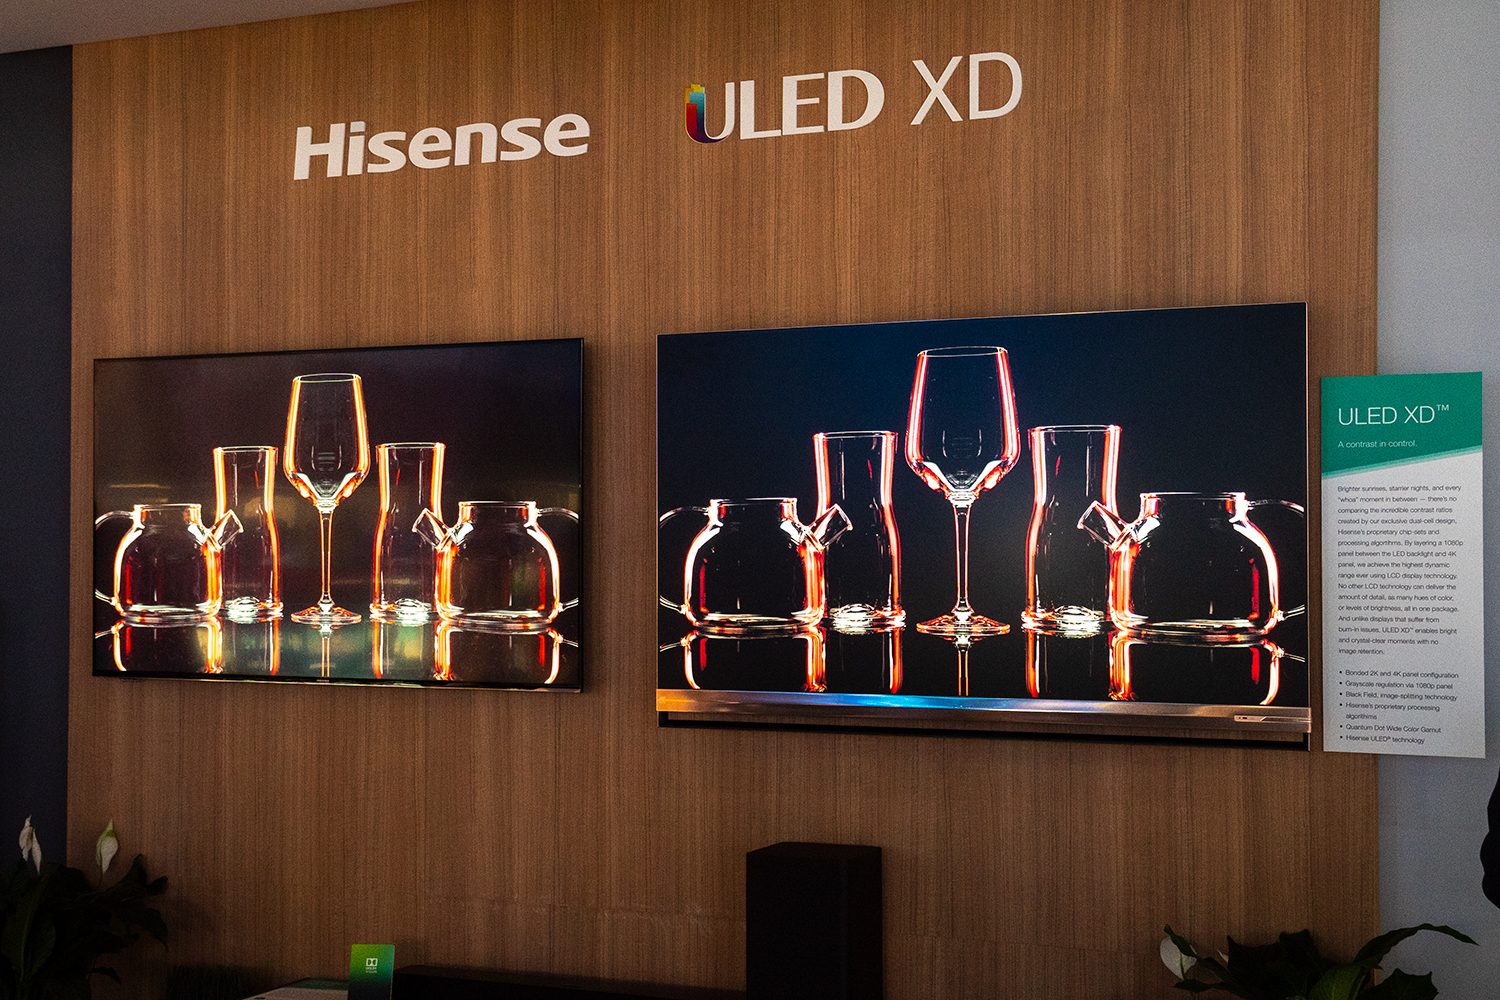 Hisense ULED XD TV